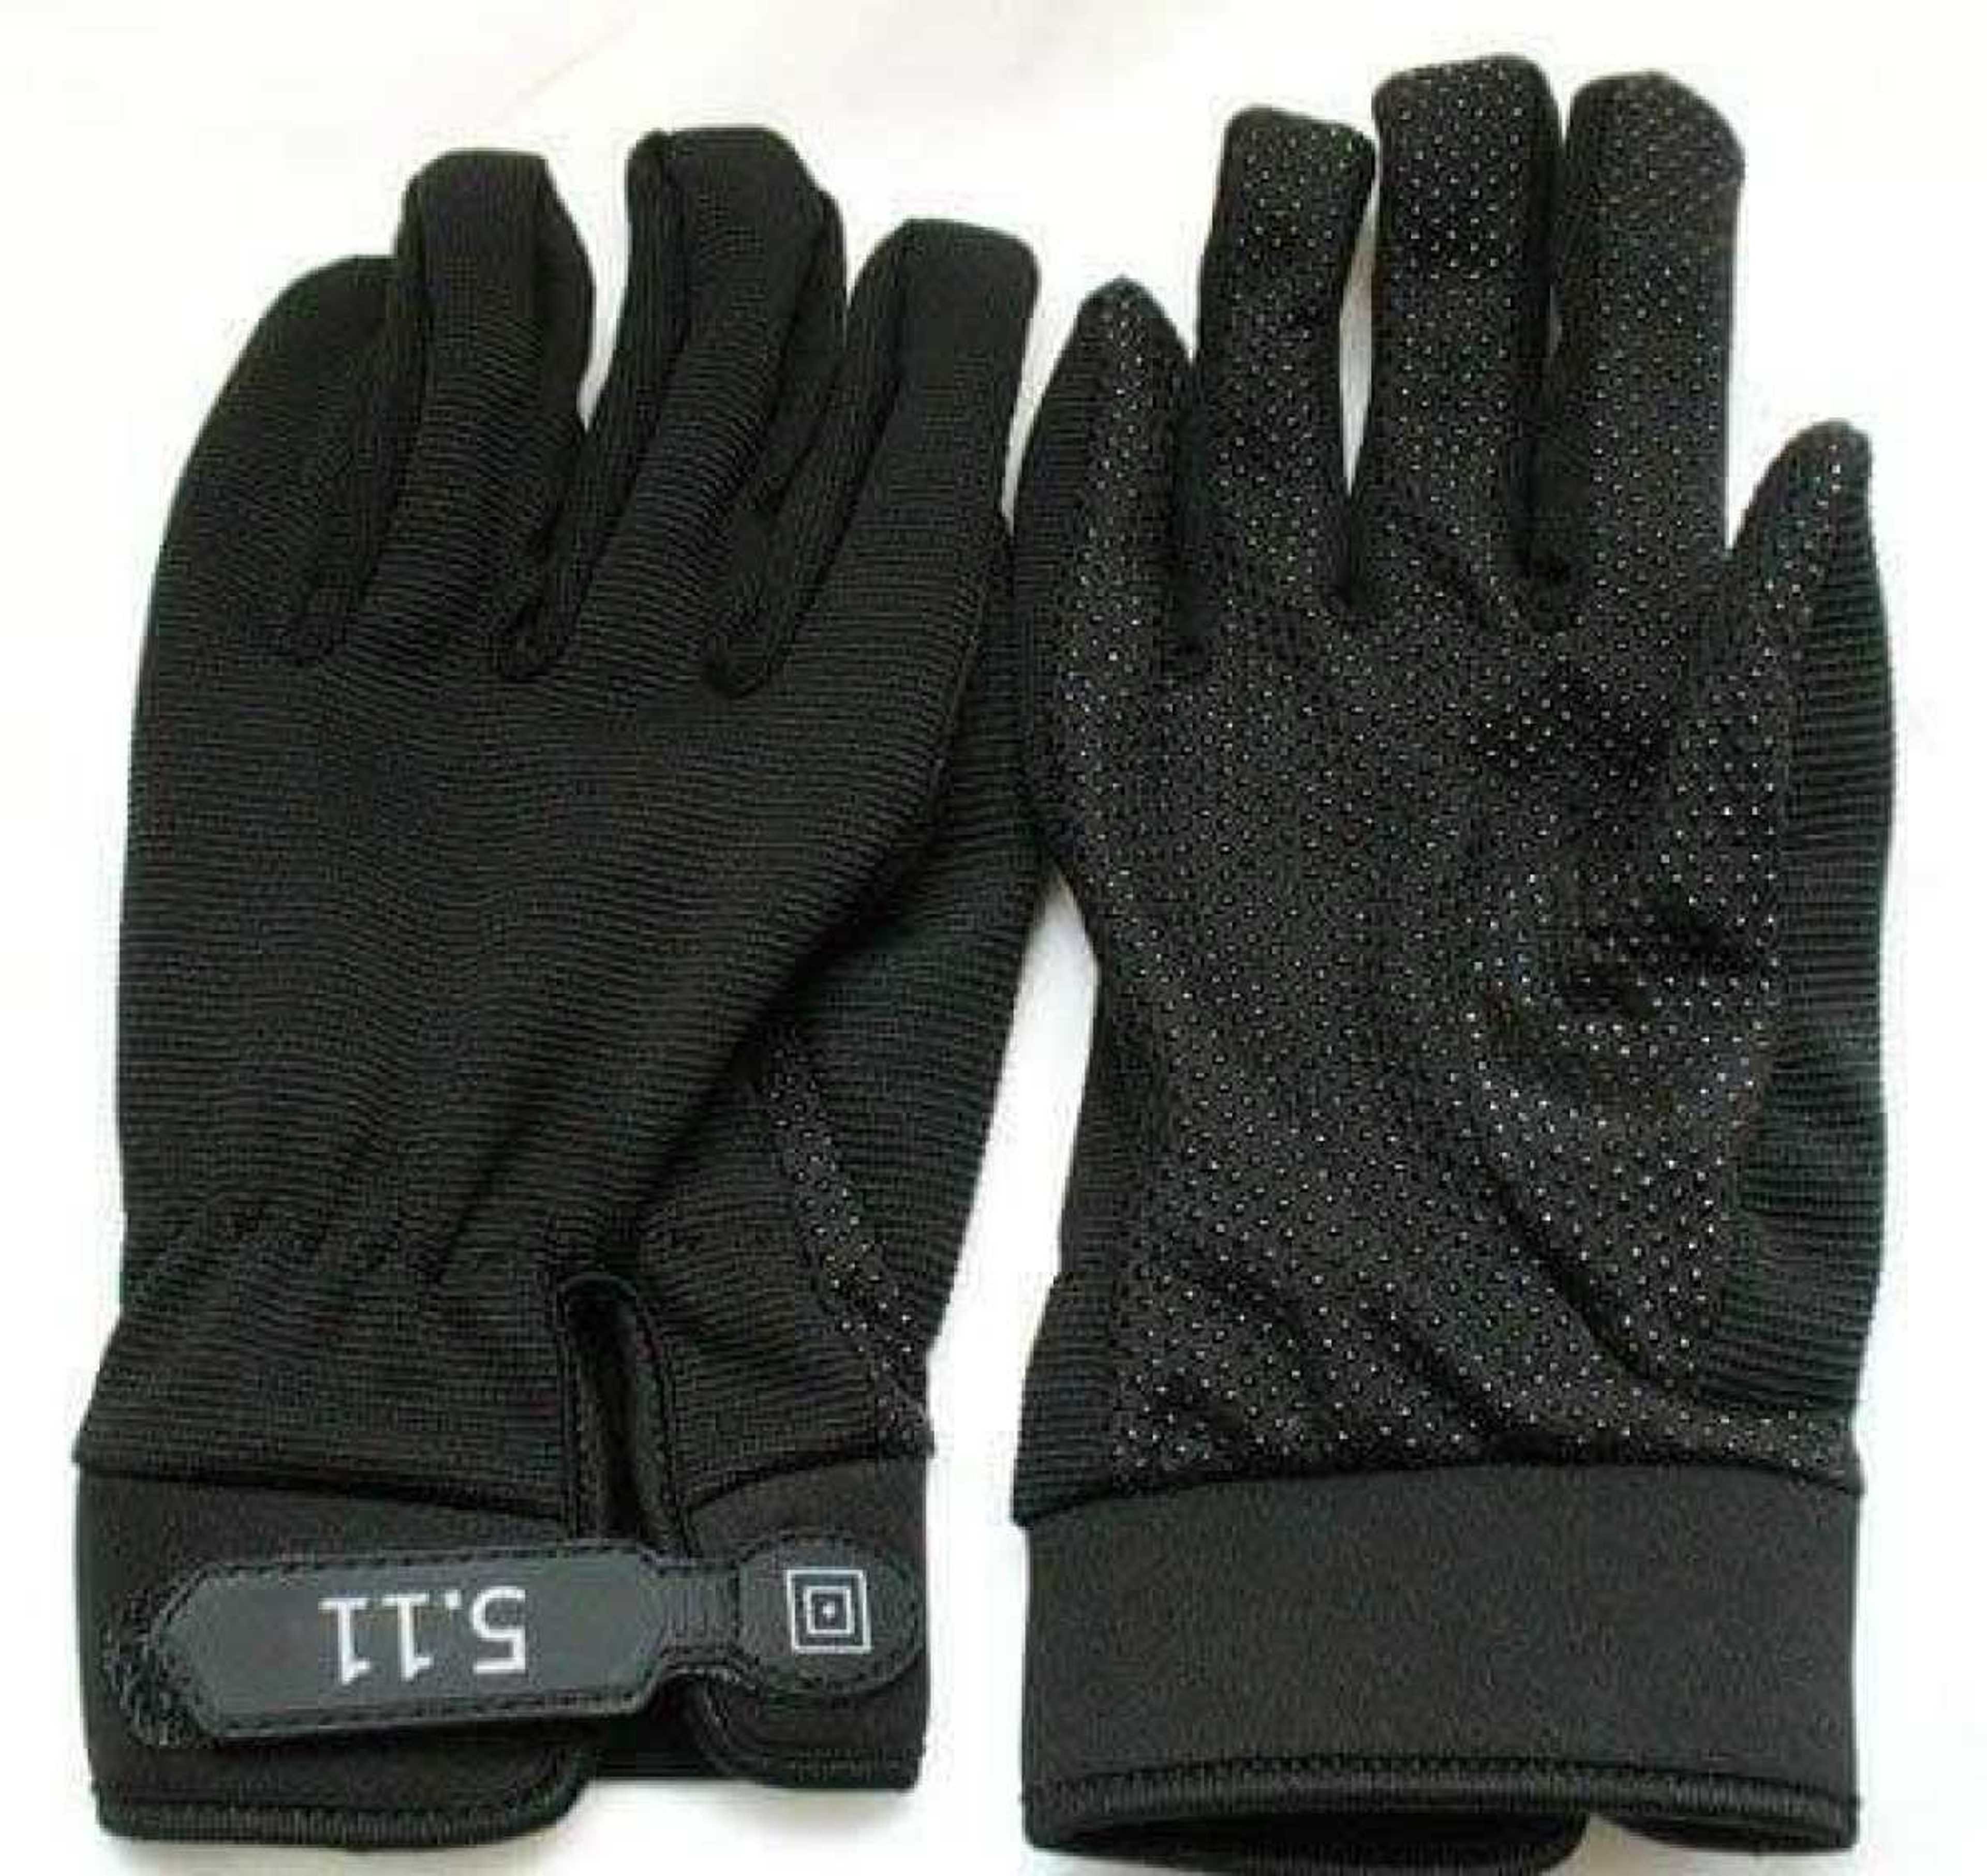 FIVE 11 gloves